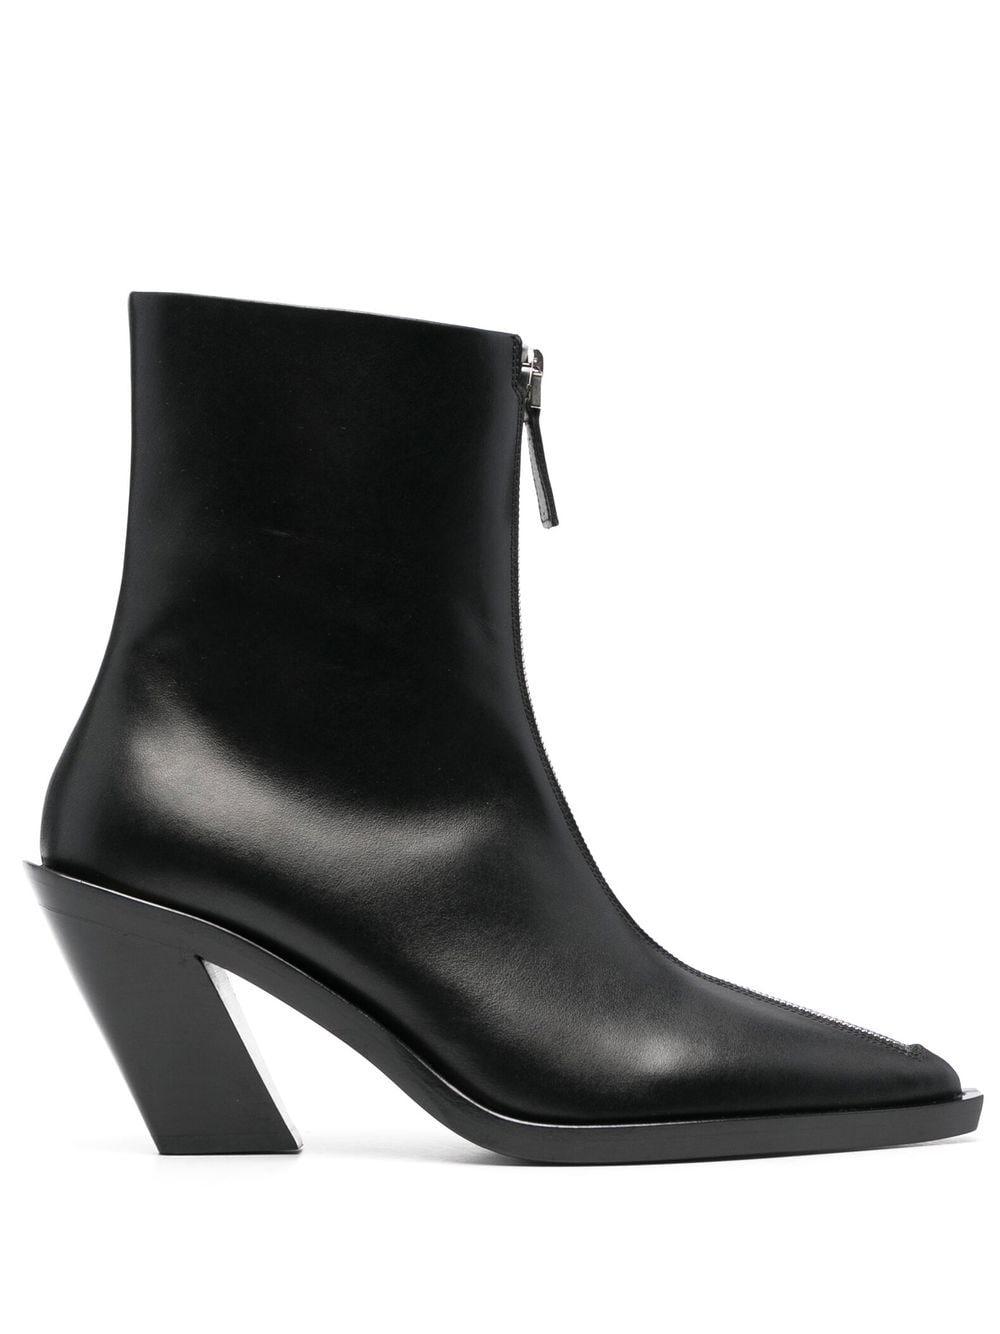 Elleme Sculpted 85mm Block-heel Boots in Black | Lyst